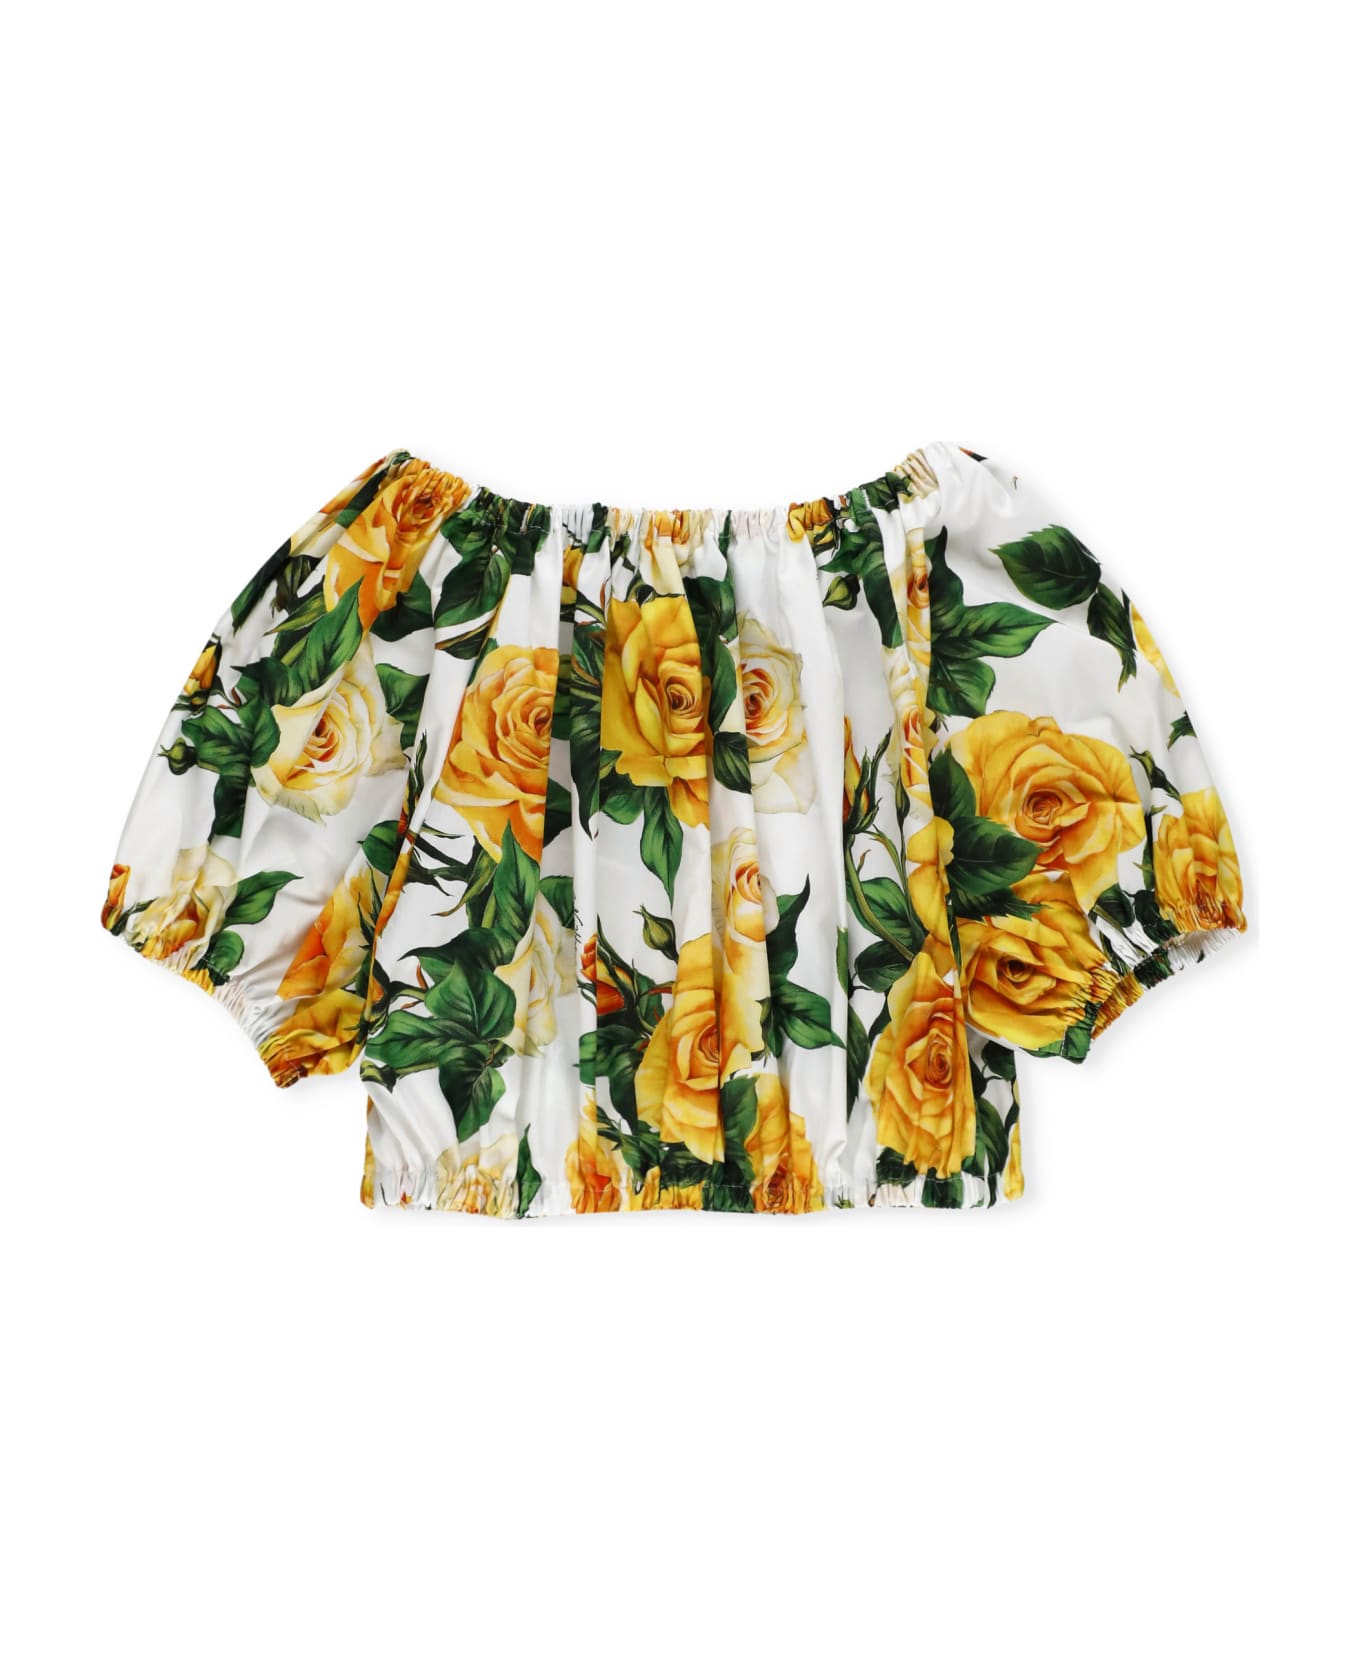 Dolce & Gabbana Flowering Blouse - Multicolore シャツ